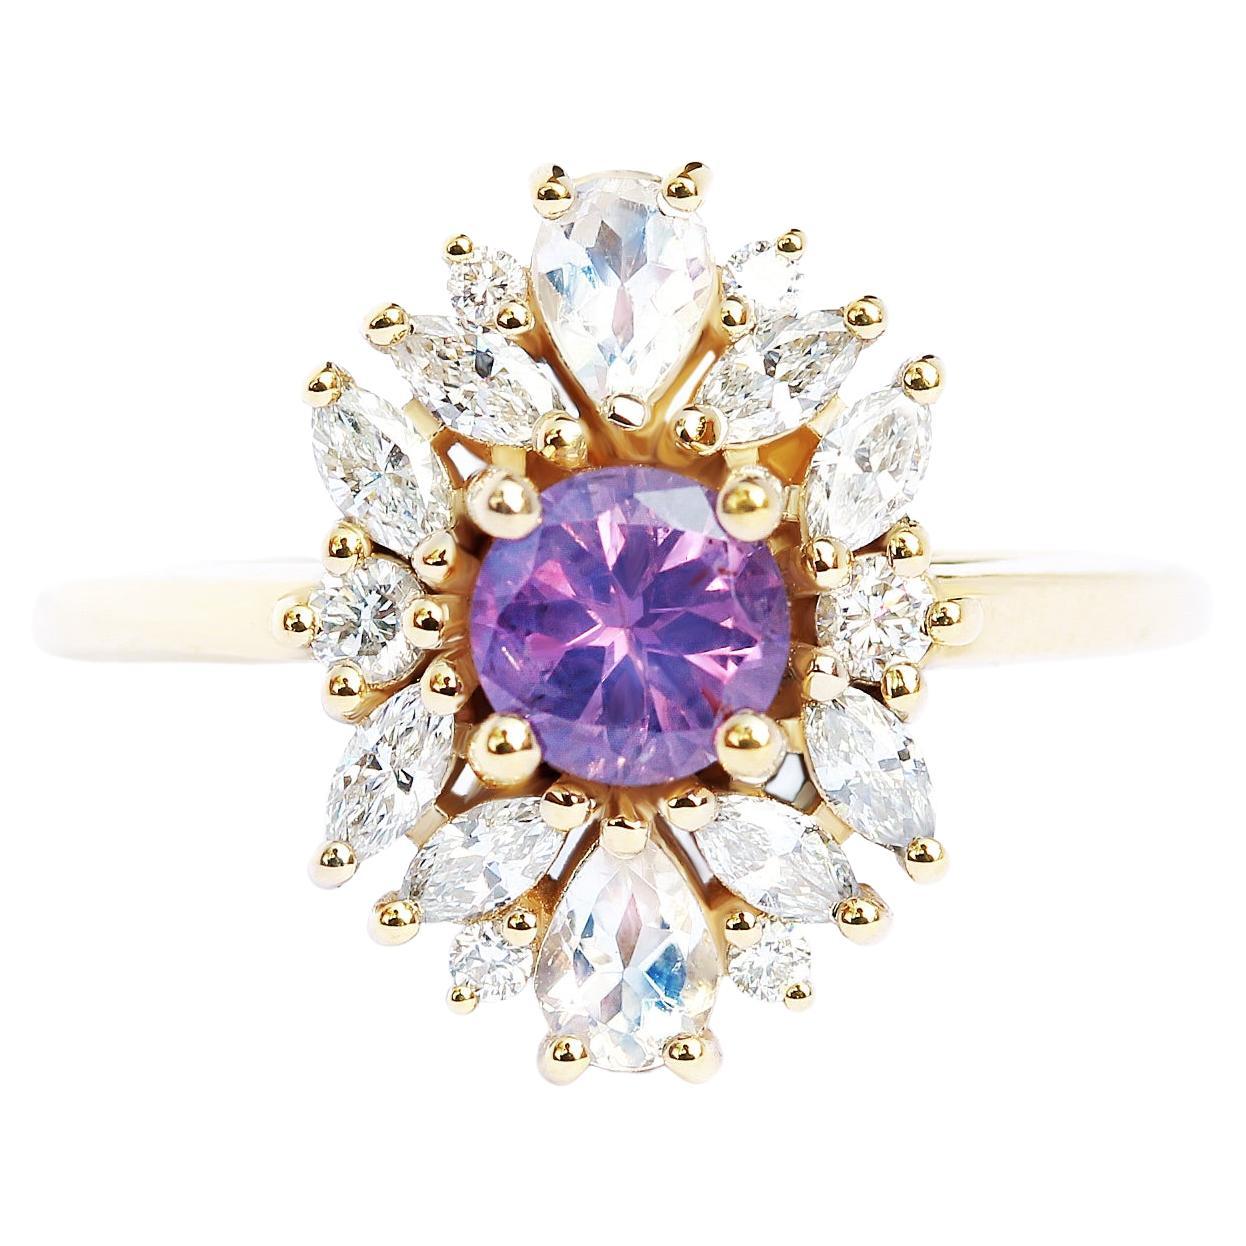 Lavender sapphire Cluster Unique Engagement Ring, Alternative Bride "Odisea"